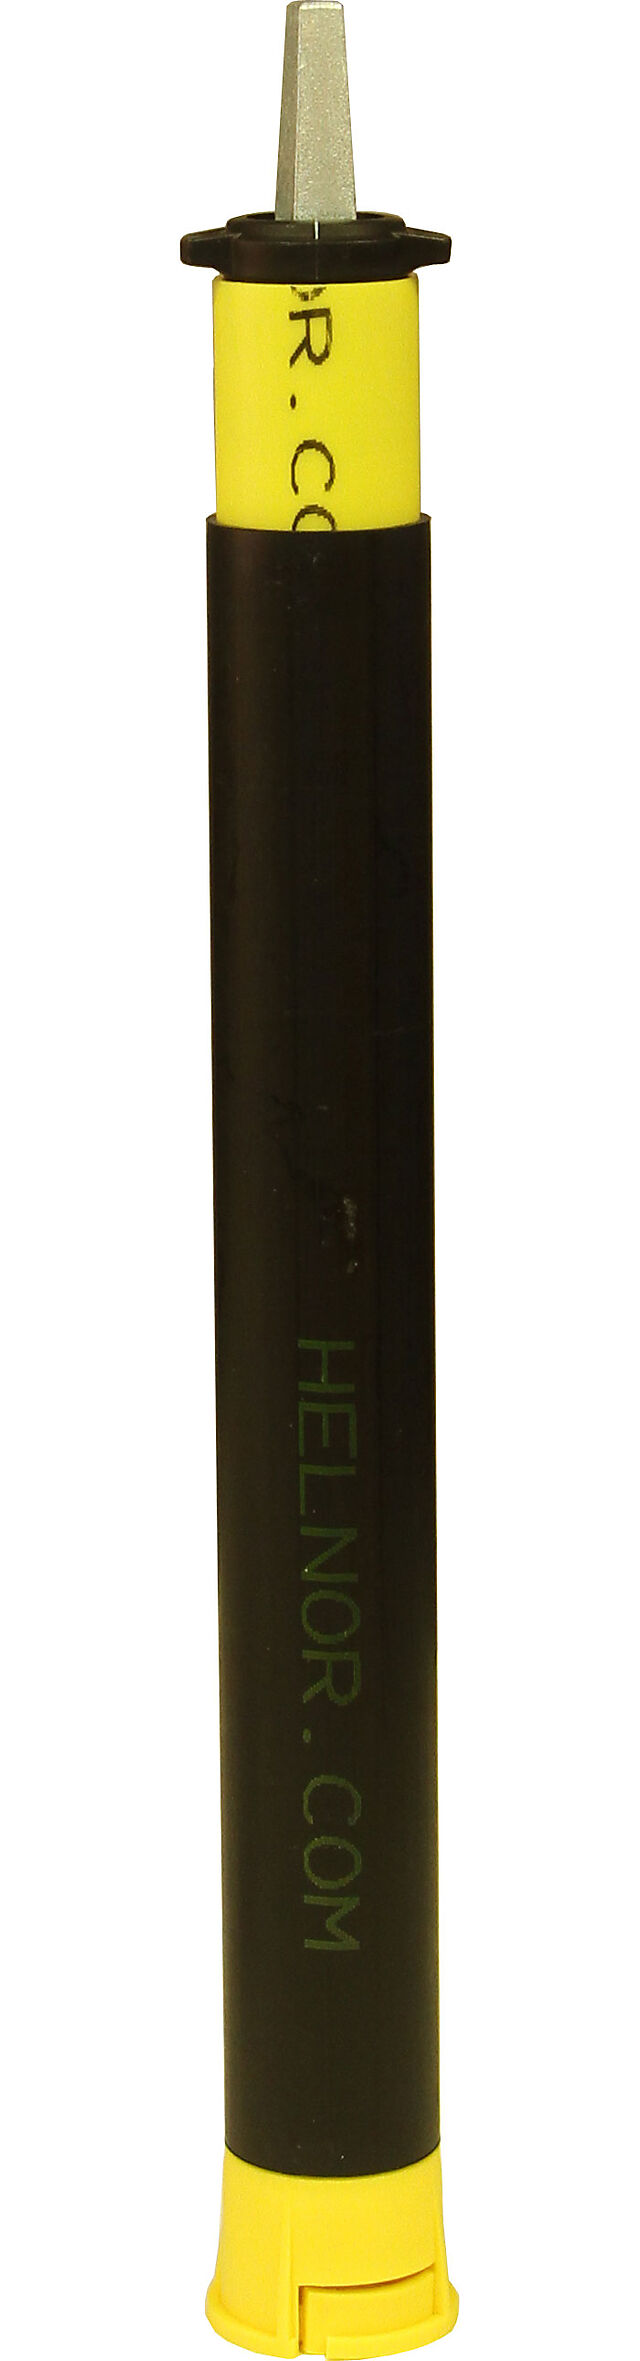 Helnor Spindelforlenger 2,02 - 3,74 m XS0 Helnor 1